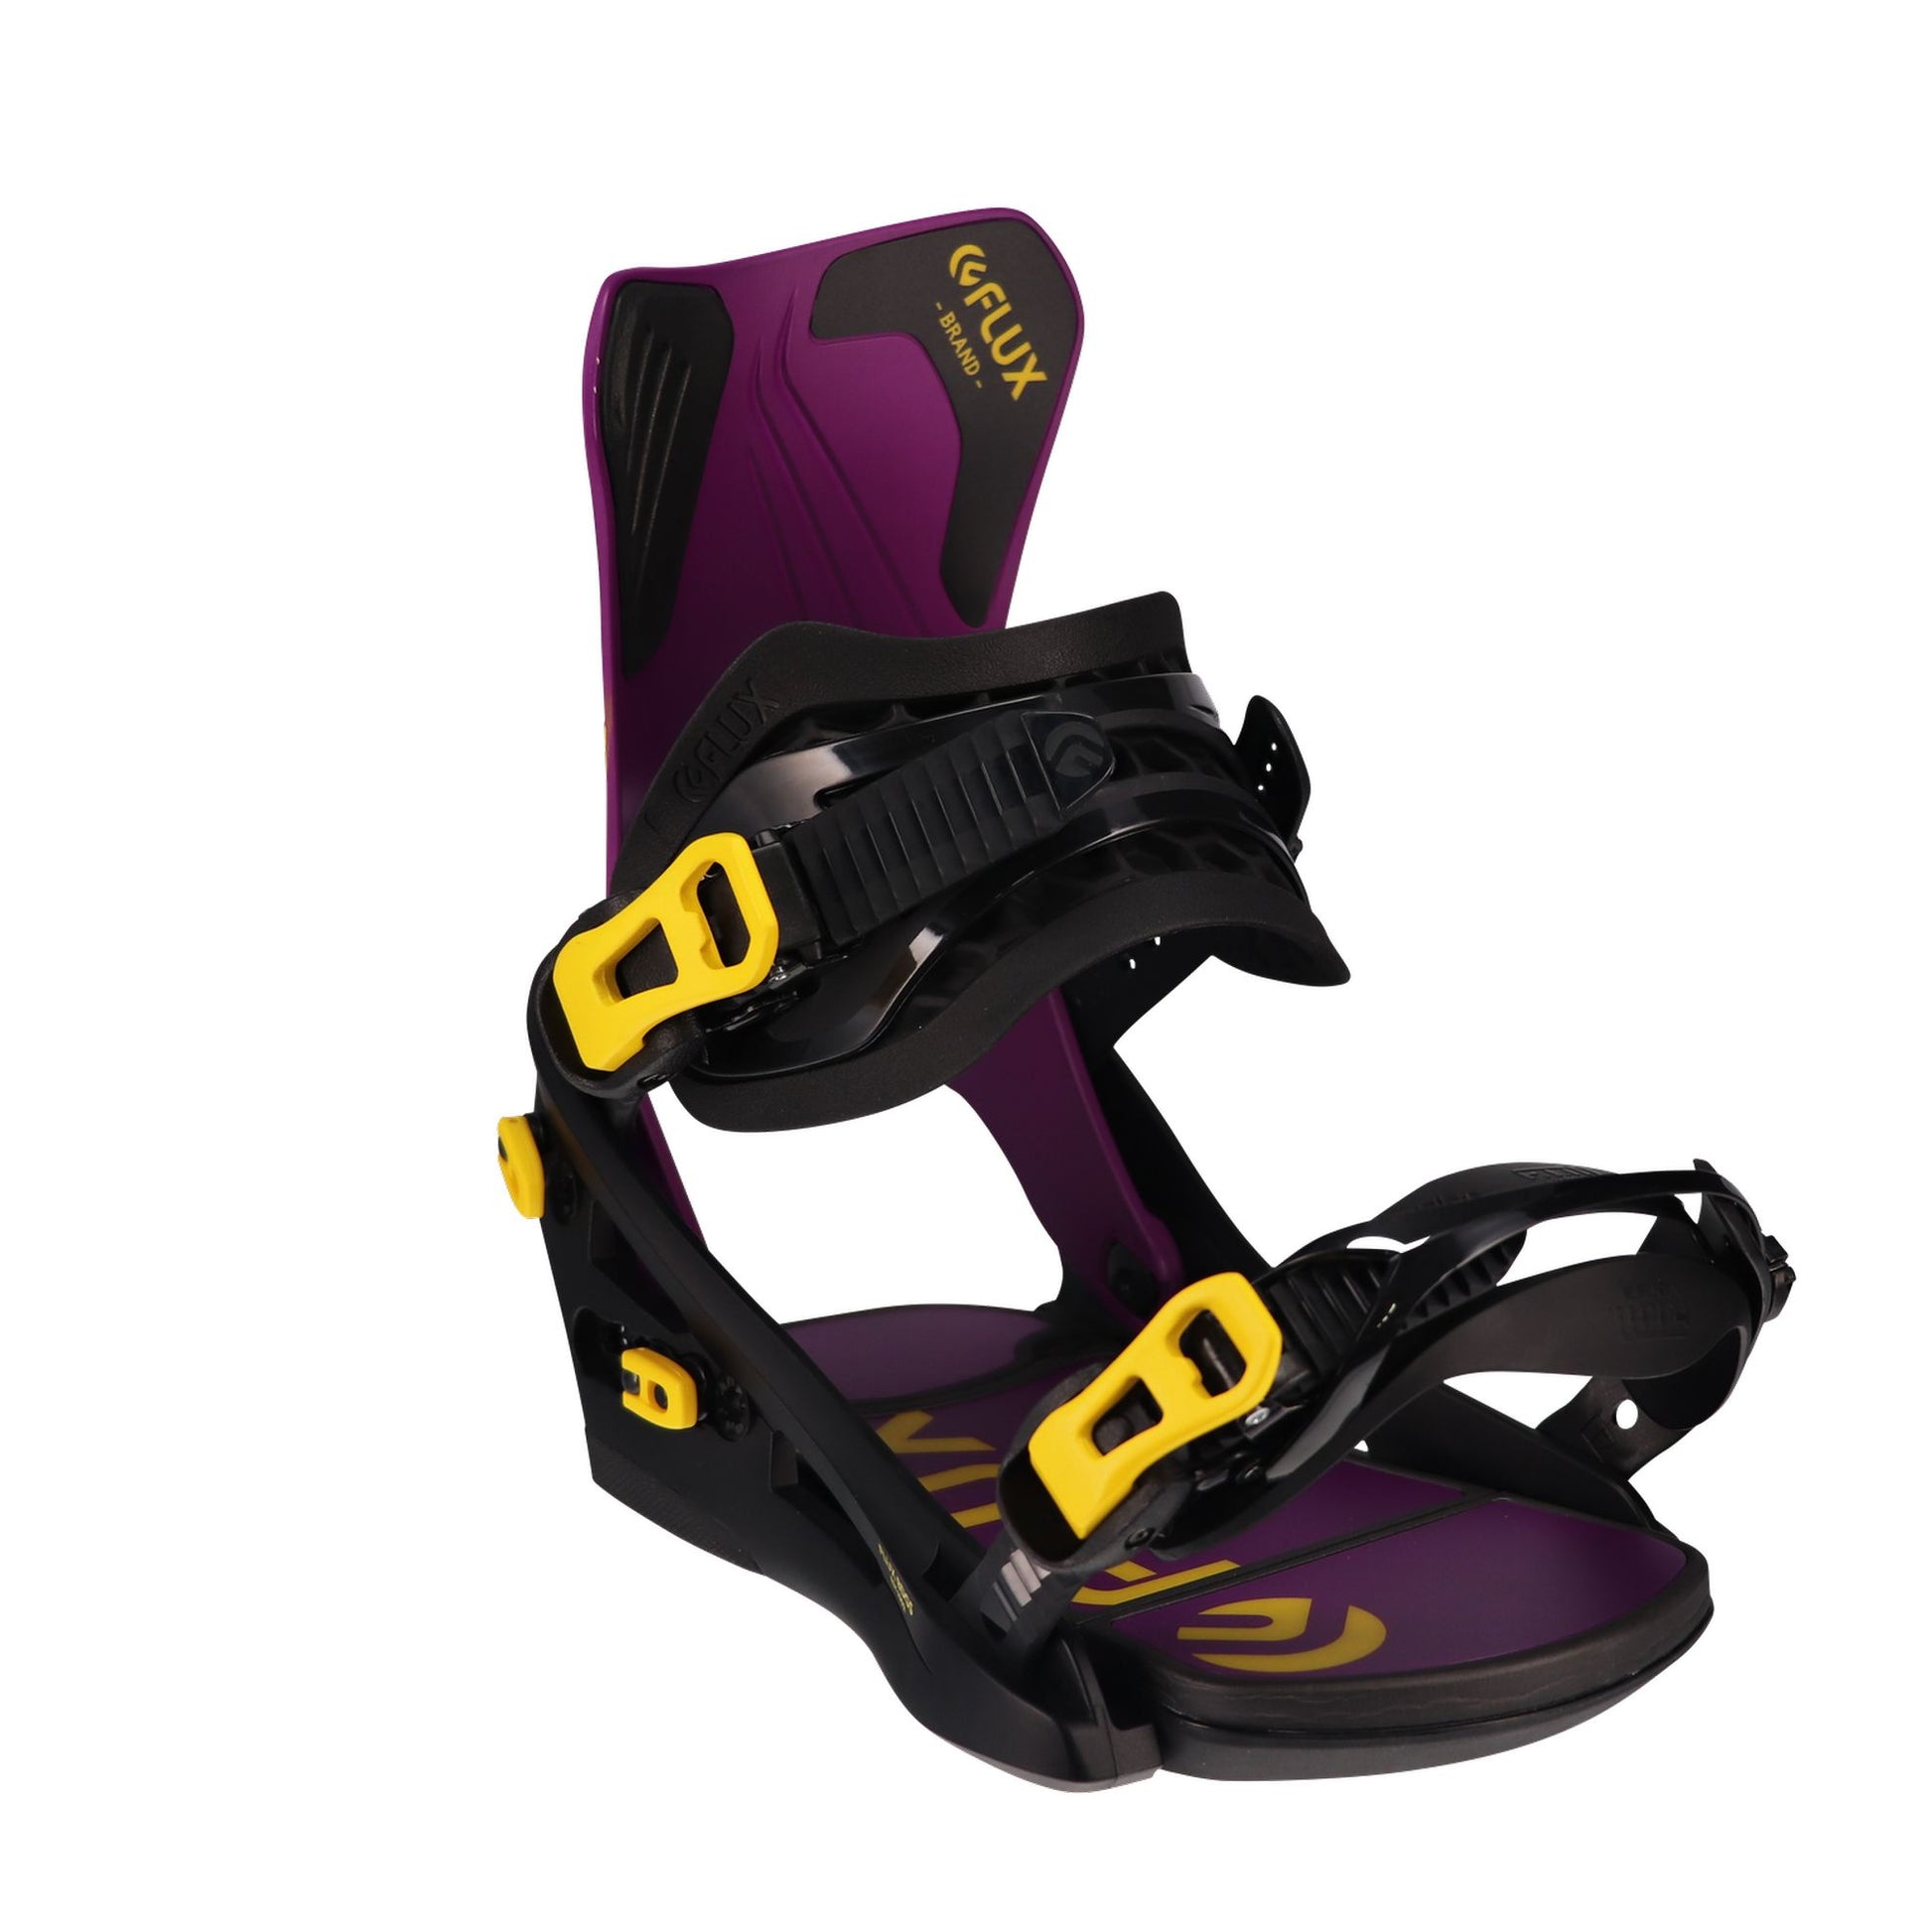 Flux DS Snowboard Binding Purple Yellow Snowboard Bindings